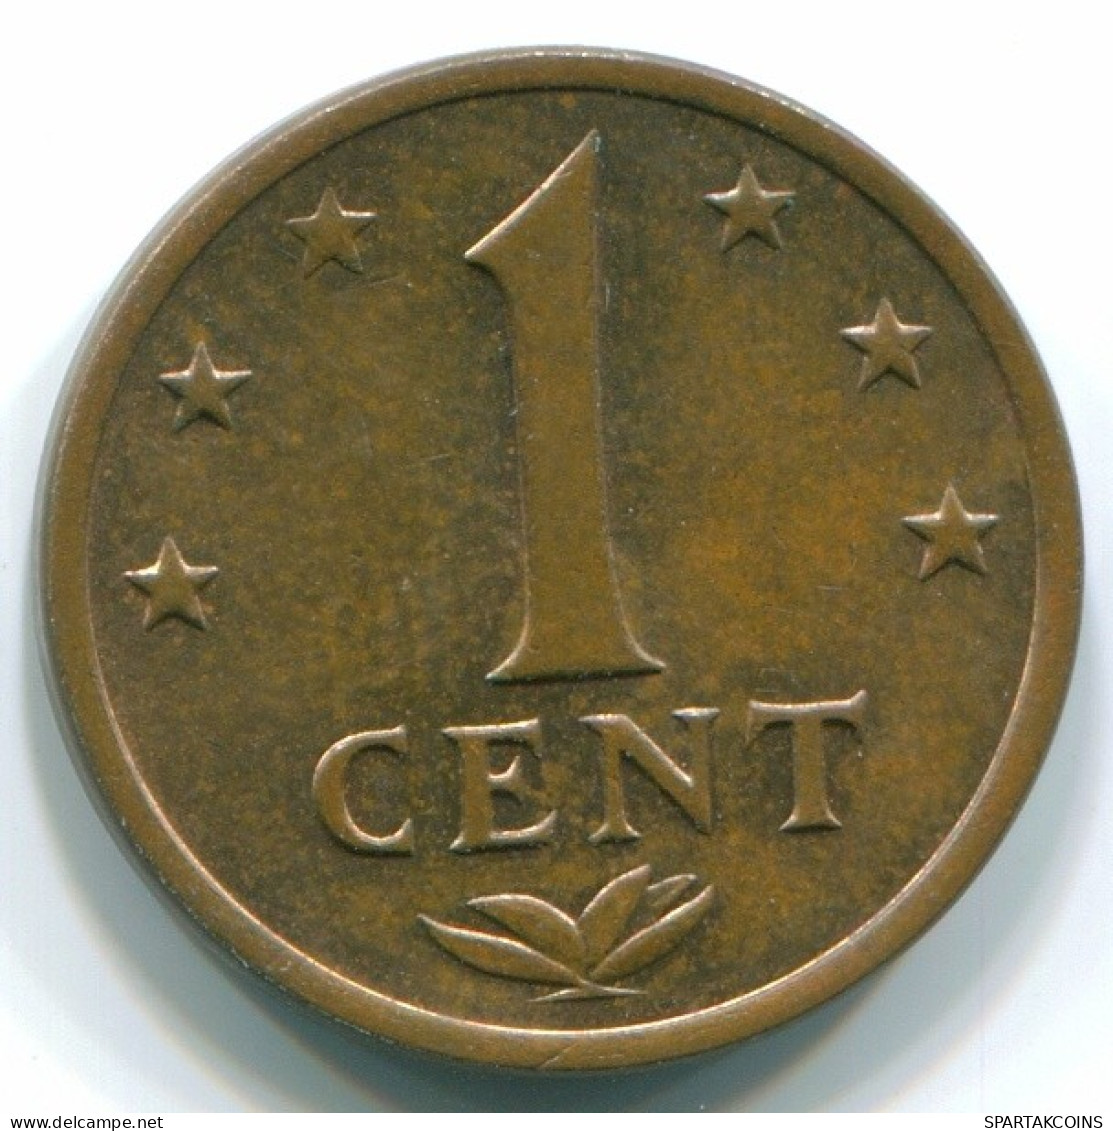 1 CENT 1977 NIEDERLÄNDISCHE ANTILLEN Bronze Koloniale Münze #S10713.D.A - Netherlands Antilles